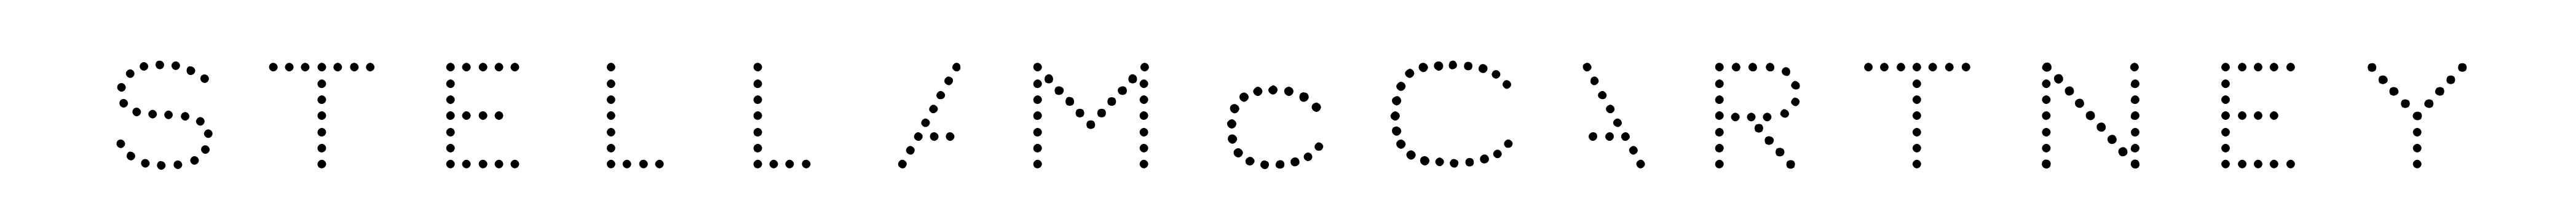 Stella McCartney logo, logotype